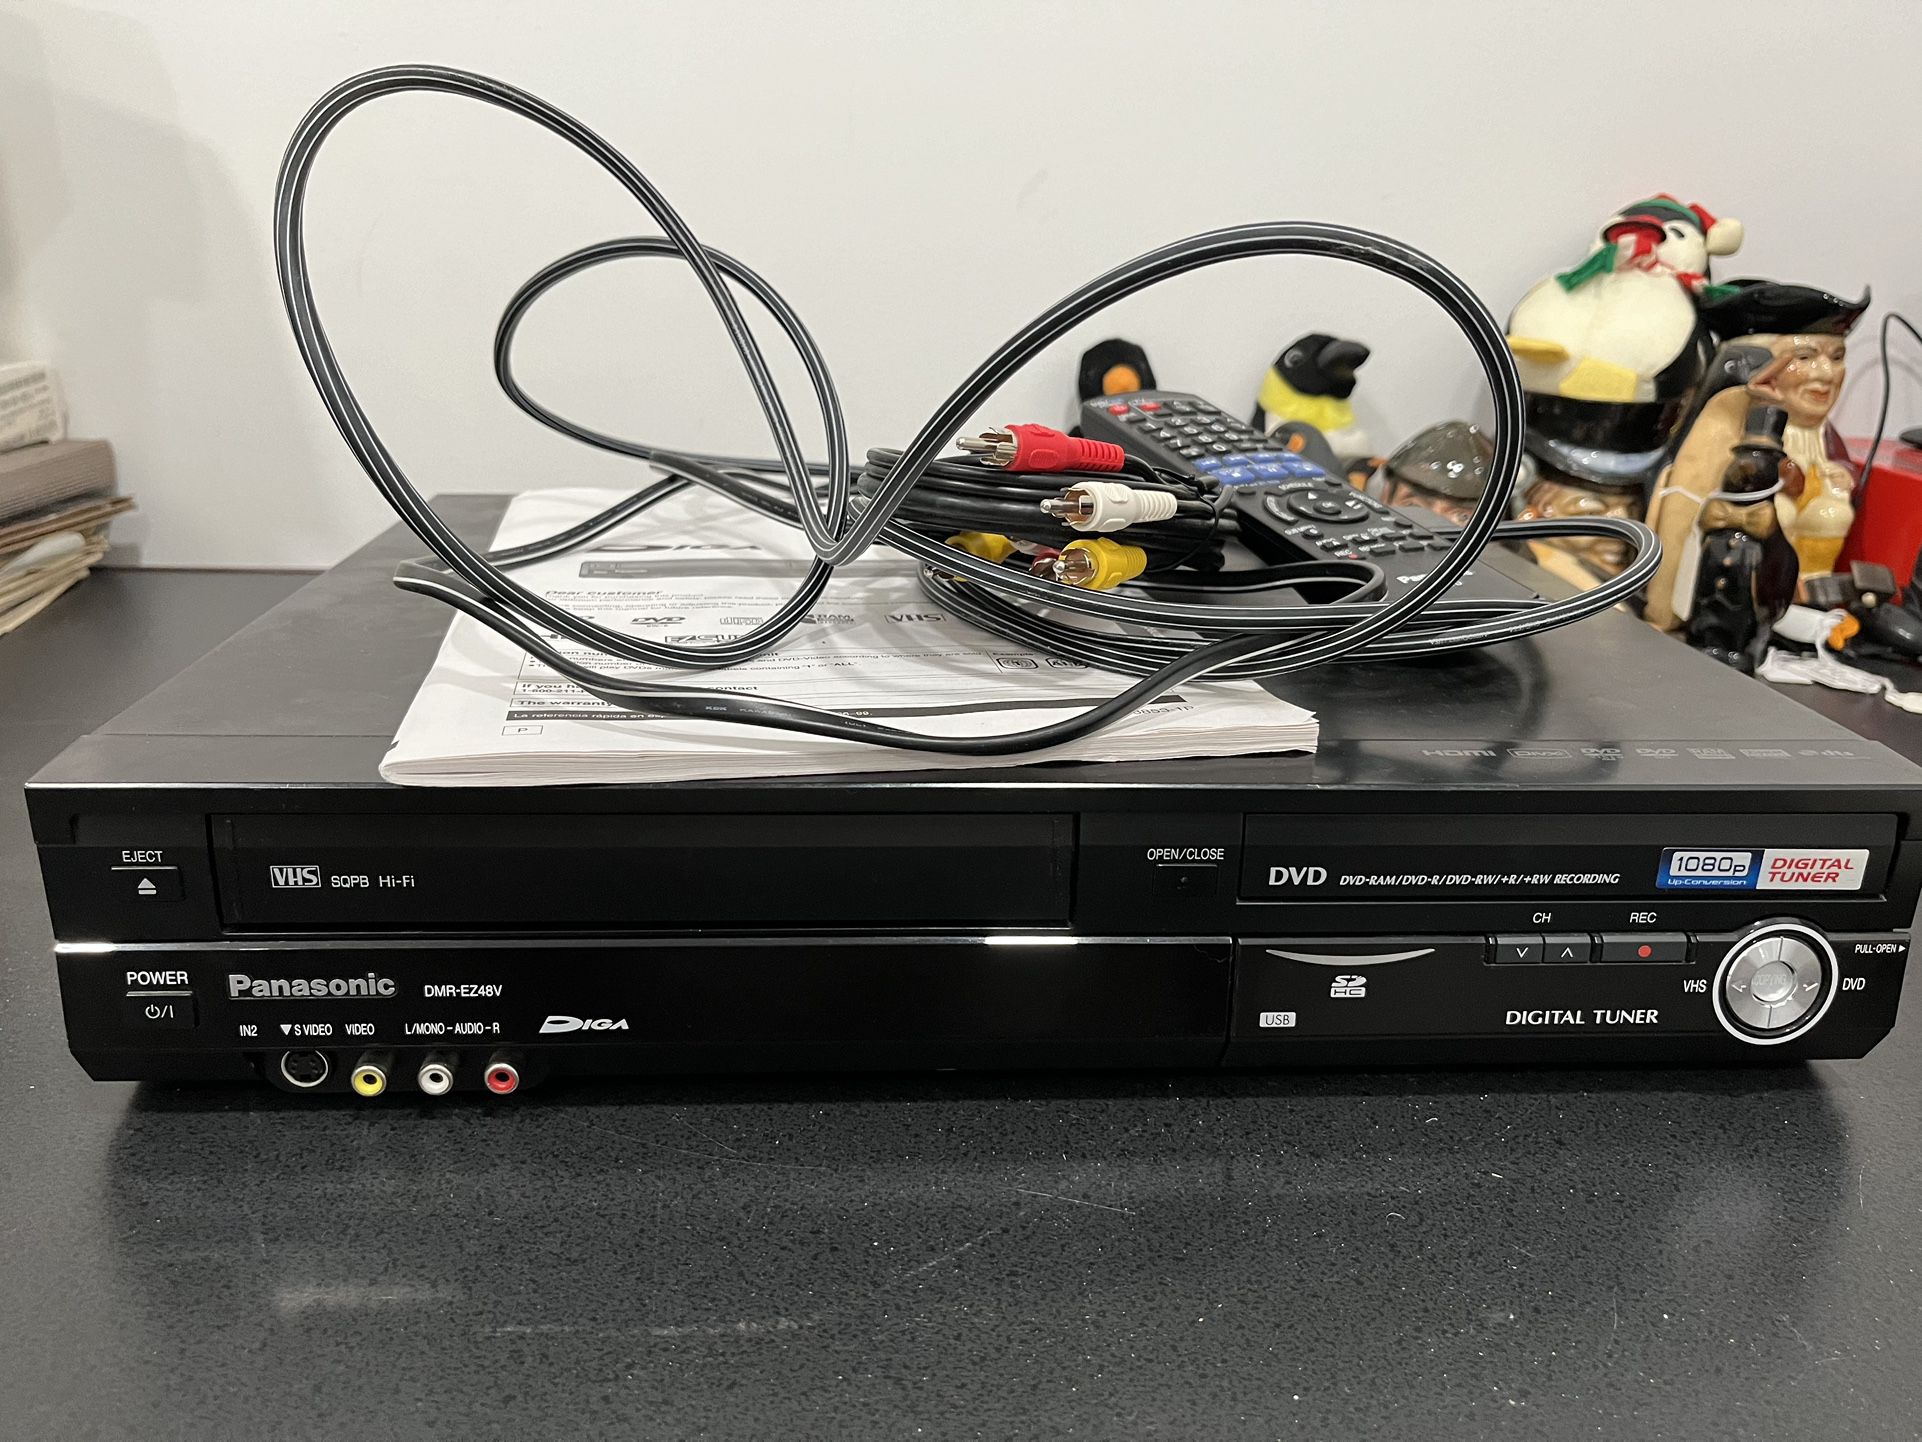 WORKING Panasonic DVD VCR Combo Recorder Remote Manual DMR-EZ48V New Blank VHS